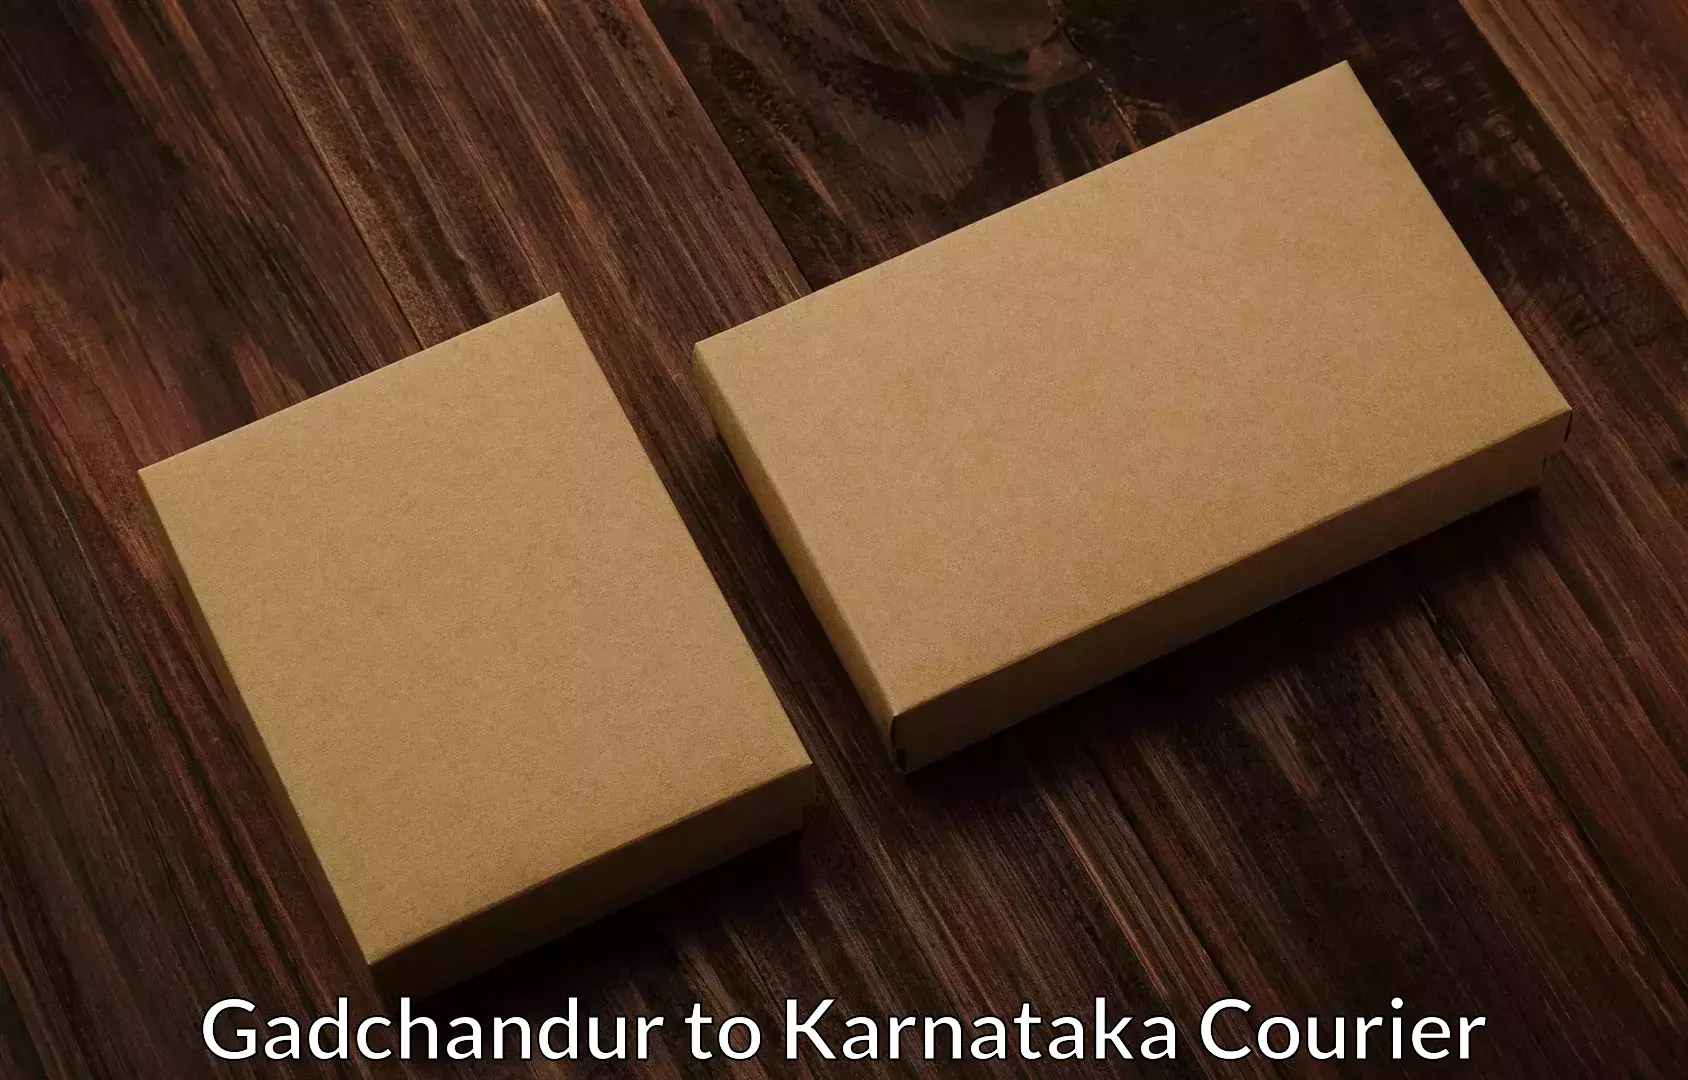 Trusted relocation experts Gadchandur to Karnataka